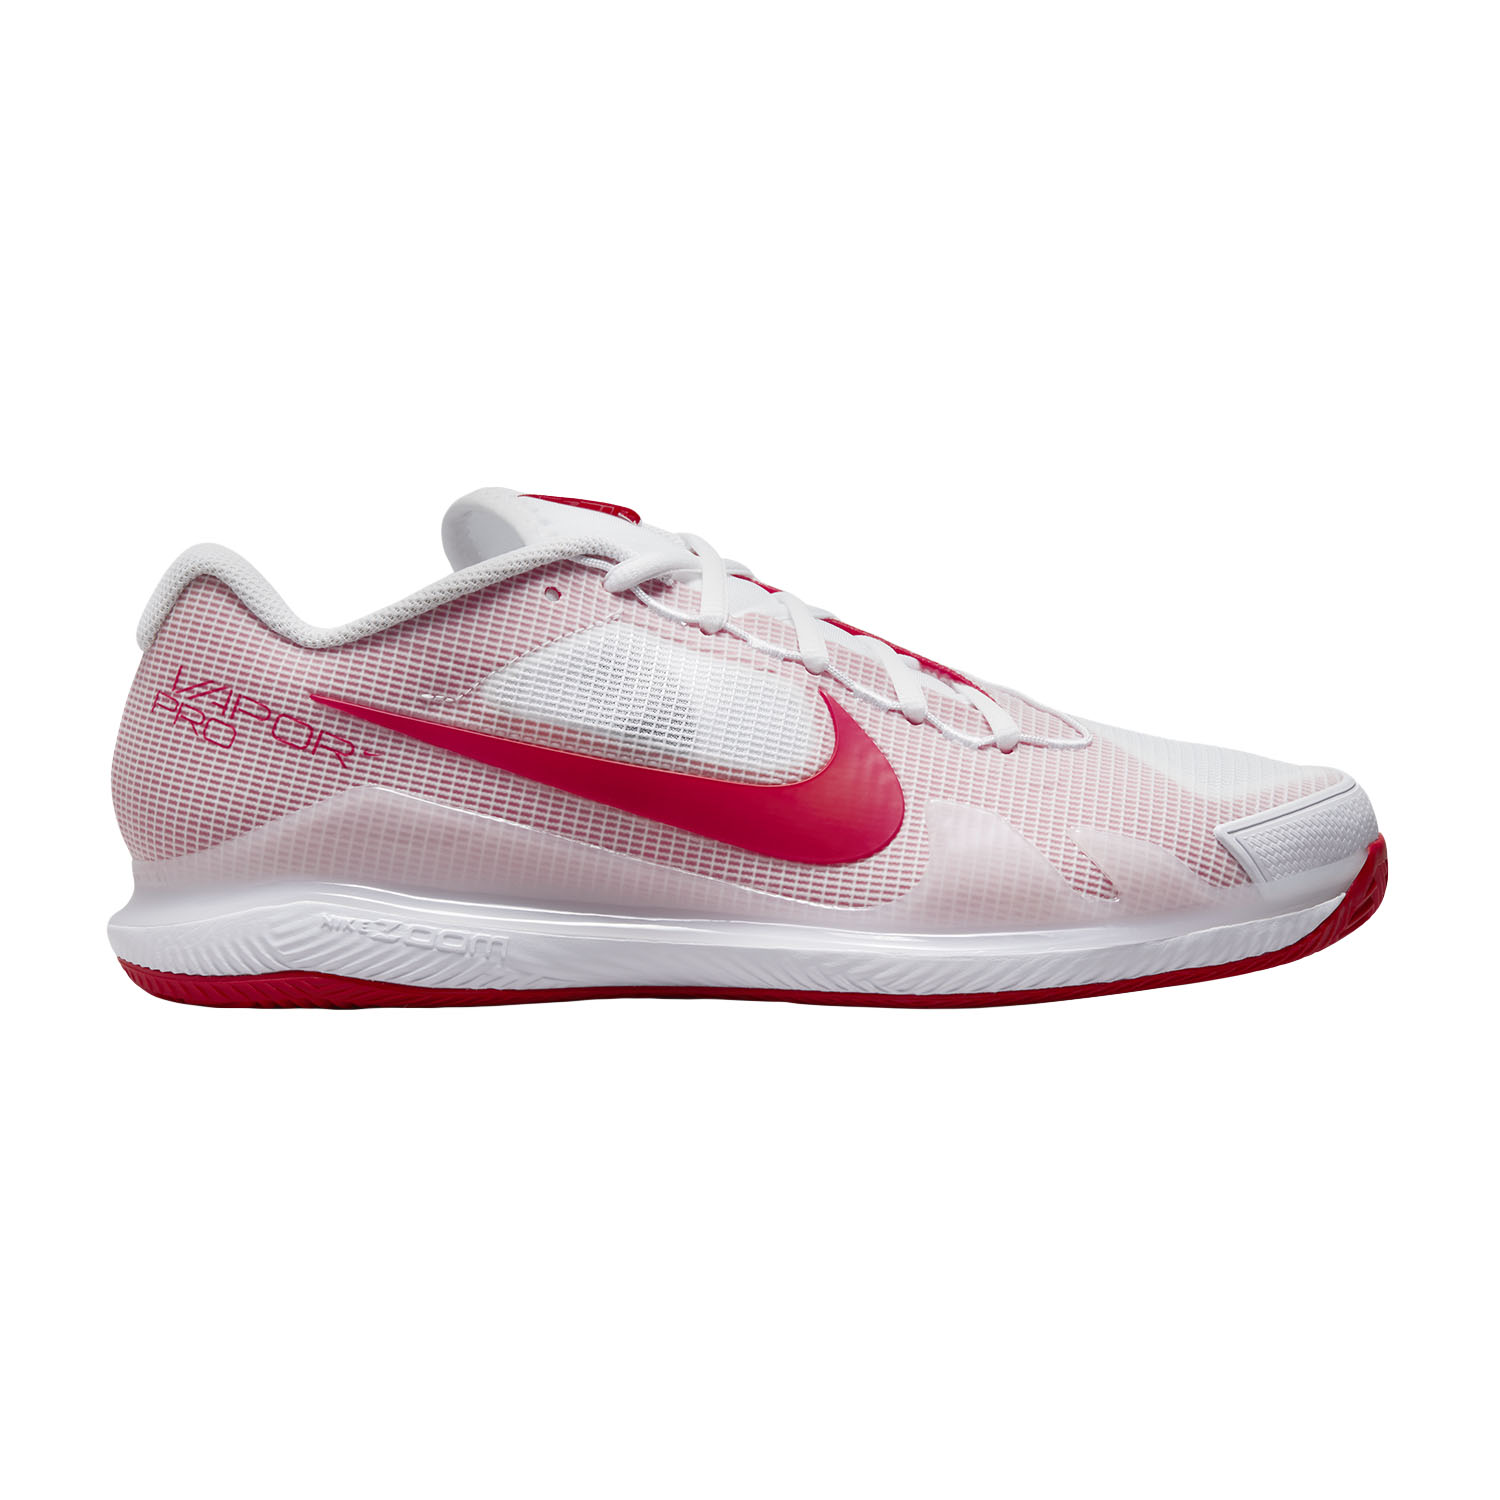 Nike Air Zoom Vapor Pro Clay Men's Tennis Shoes - White